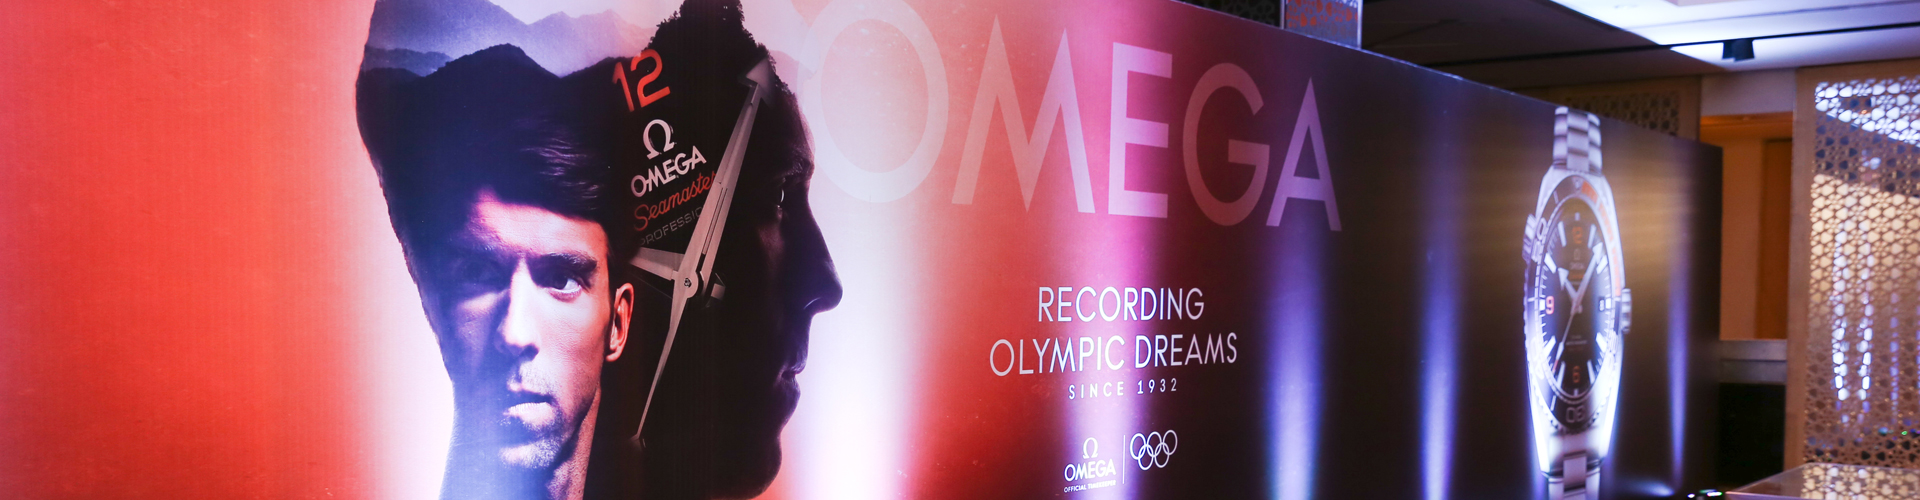 OMEGA felicitates Sri Lankan Olympic Team as they prepare for Rio 2016